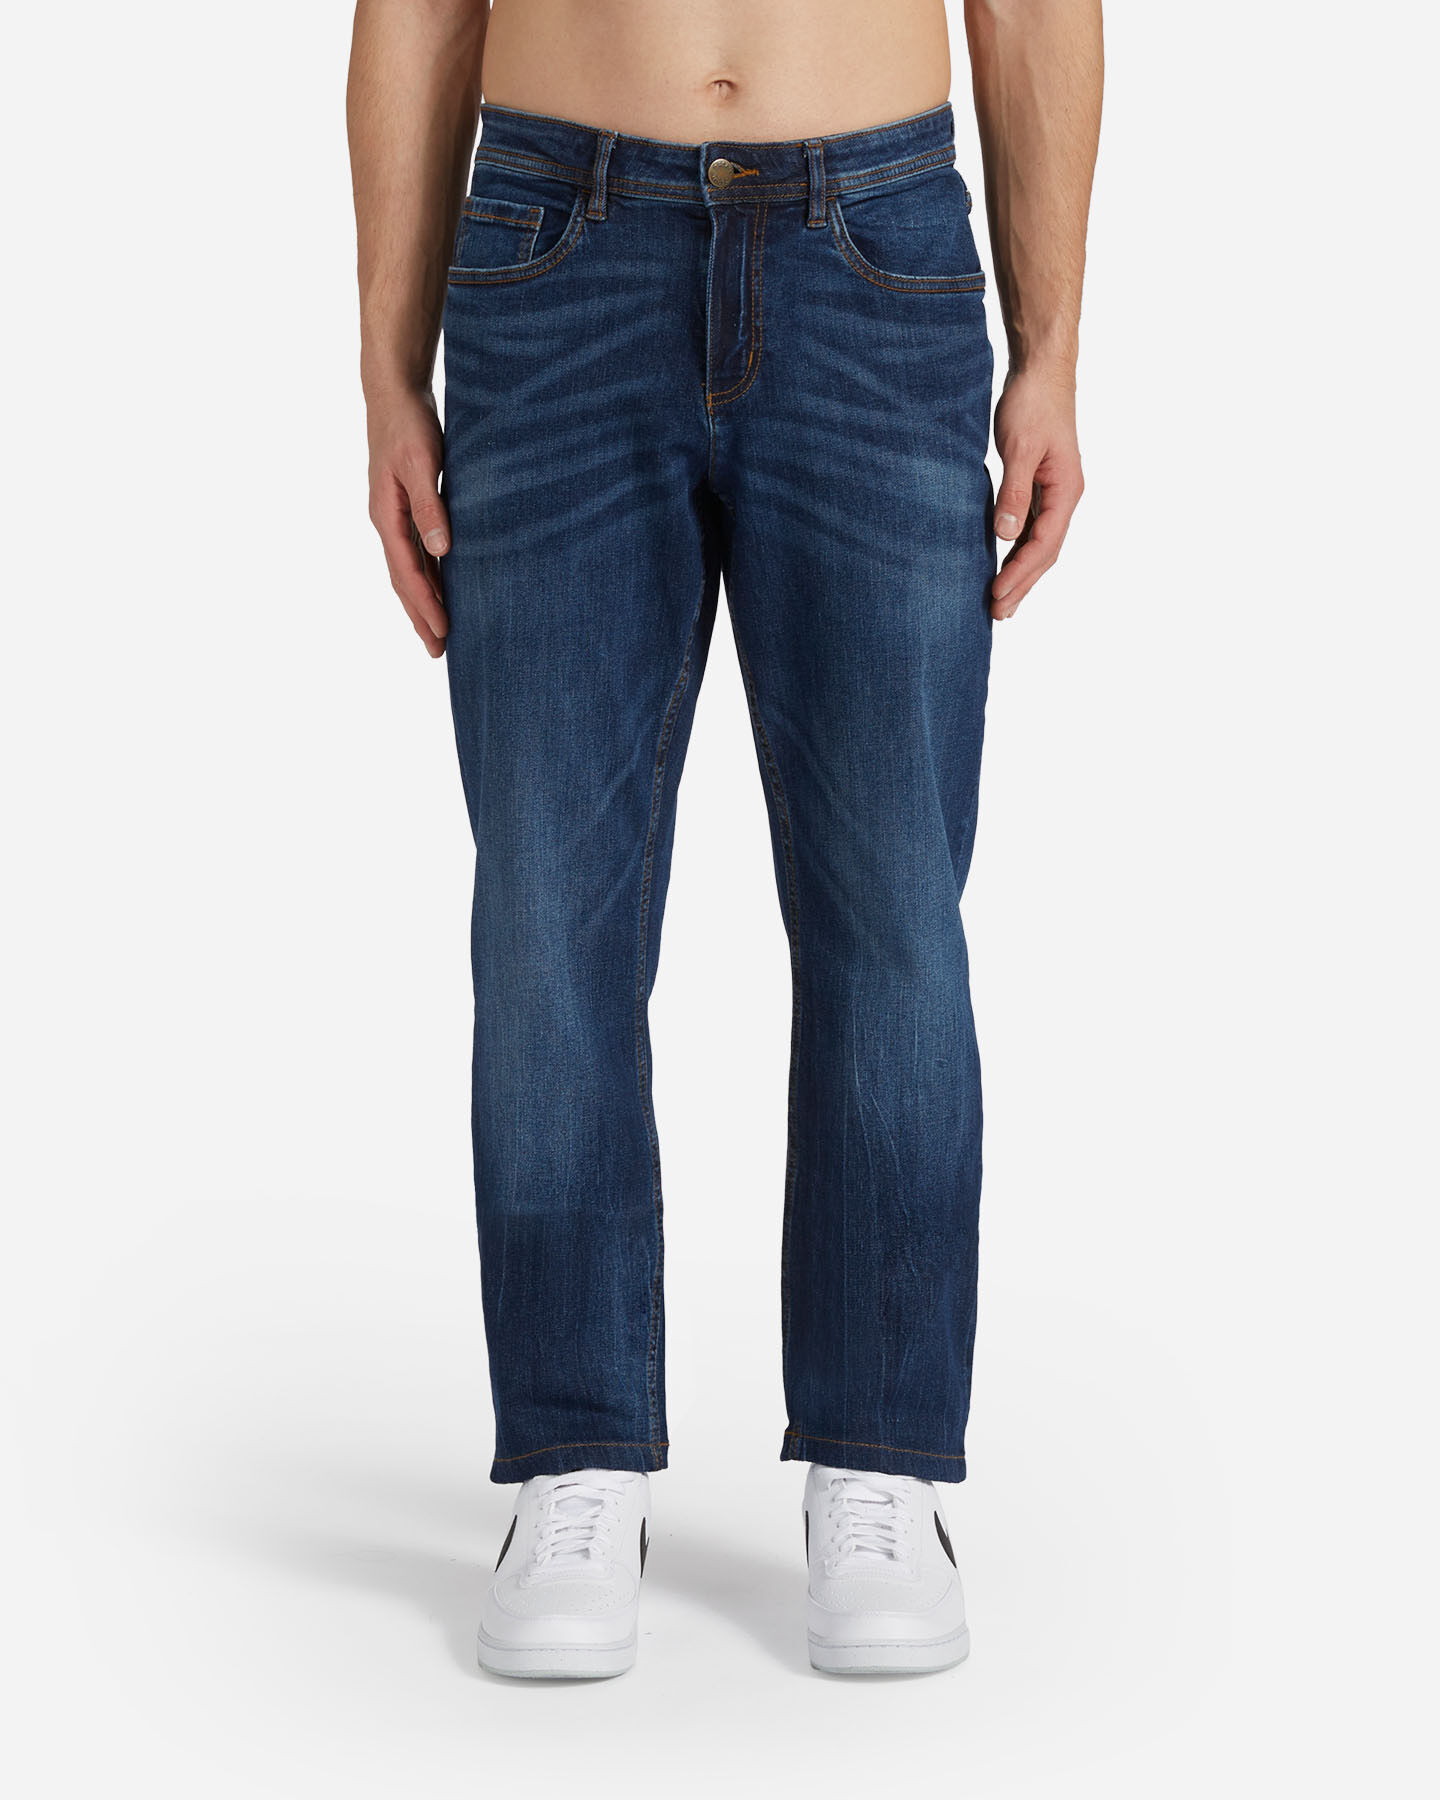  Jeans DACK'S ESSENTIAL M S4129648|DD|46 scatto 0